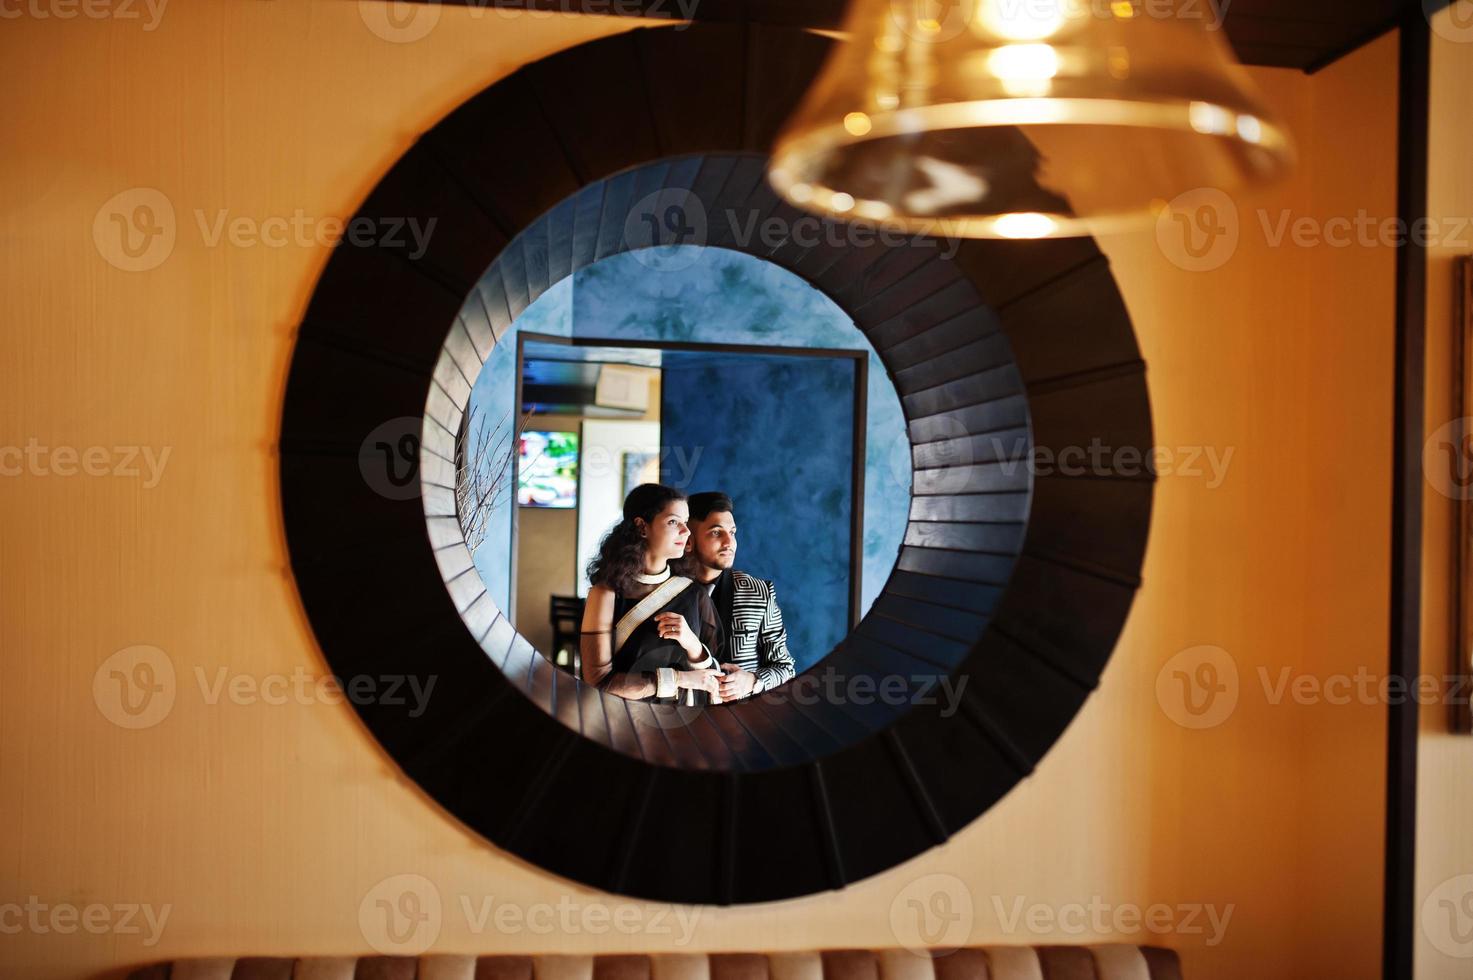 lindo casal indiano apaixonado, veste saree e terno elegante, posou no restaurante no círculo redondo na parede. foto